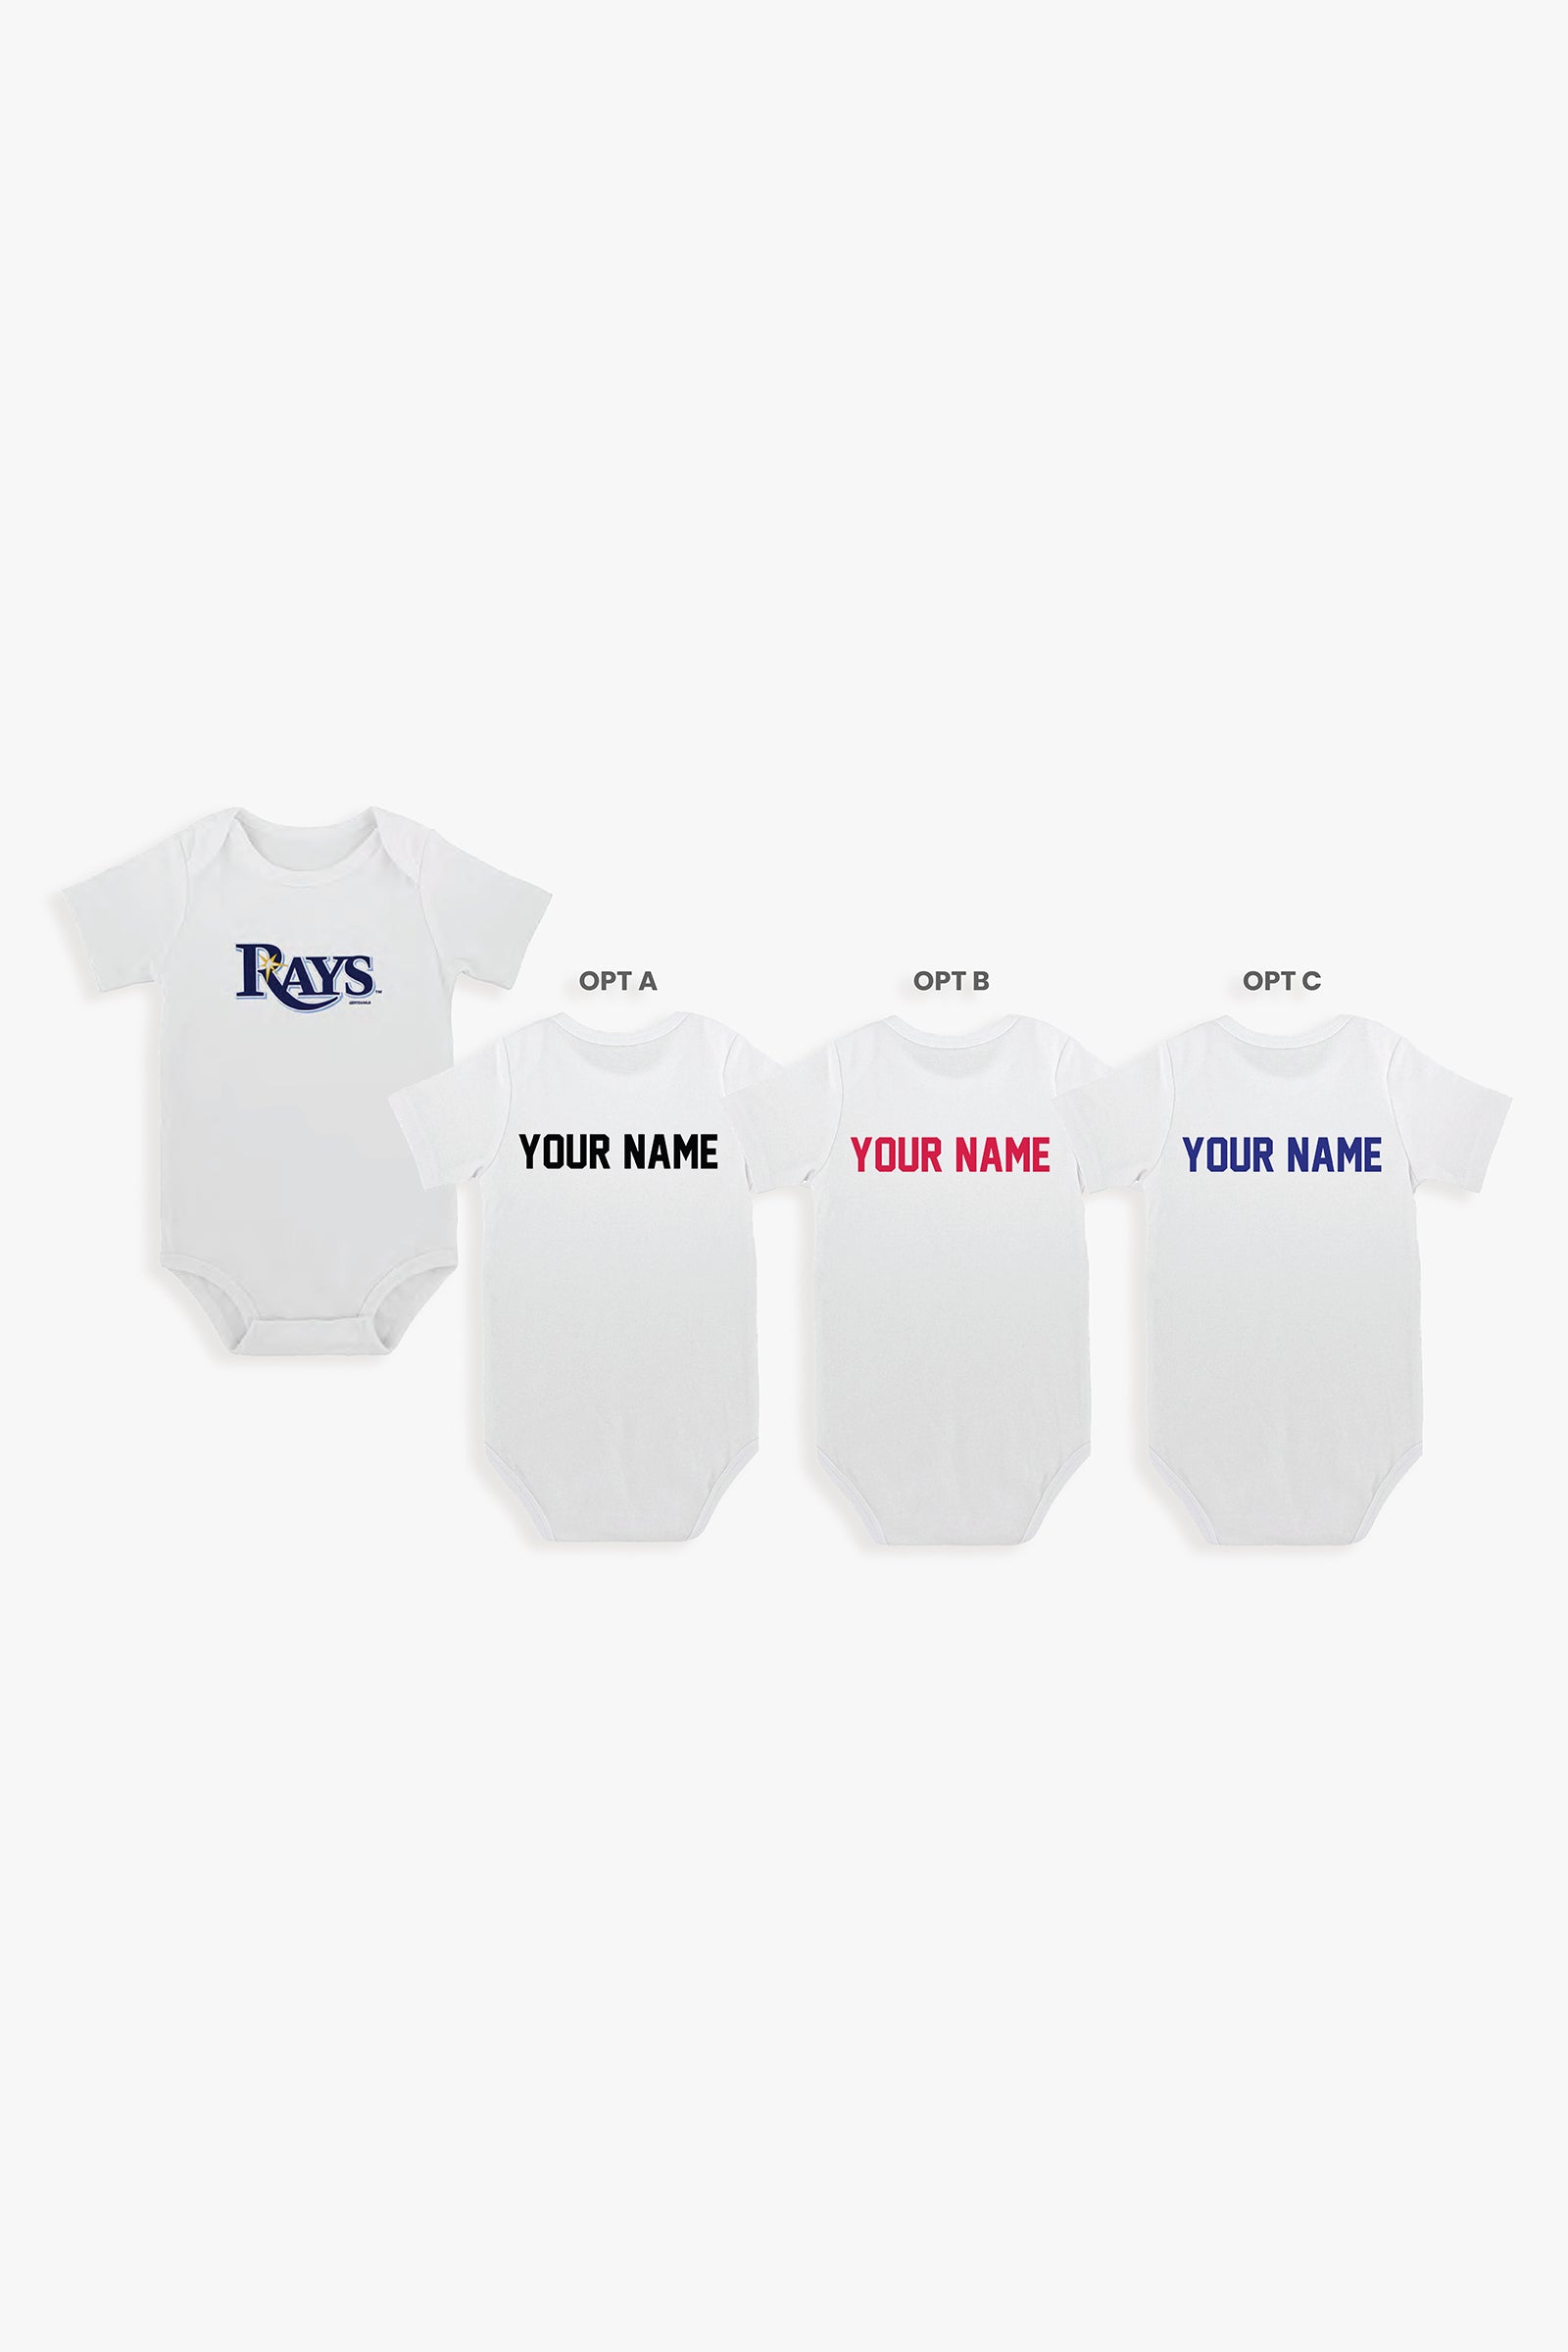 Customizable MLB Baby Bodysuit in White (6-9 Months)